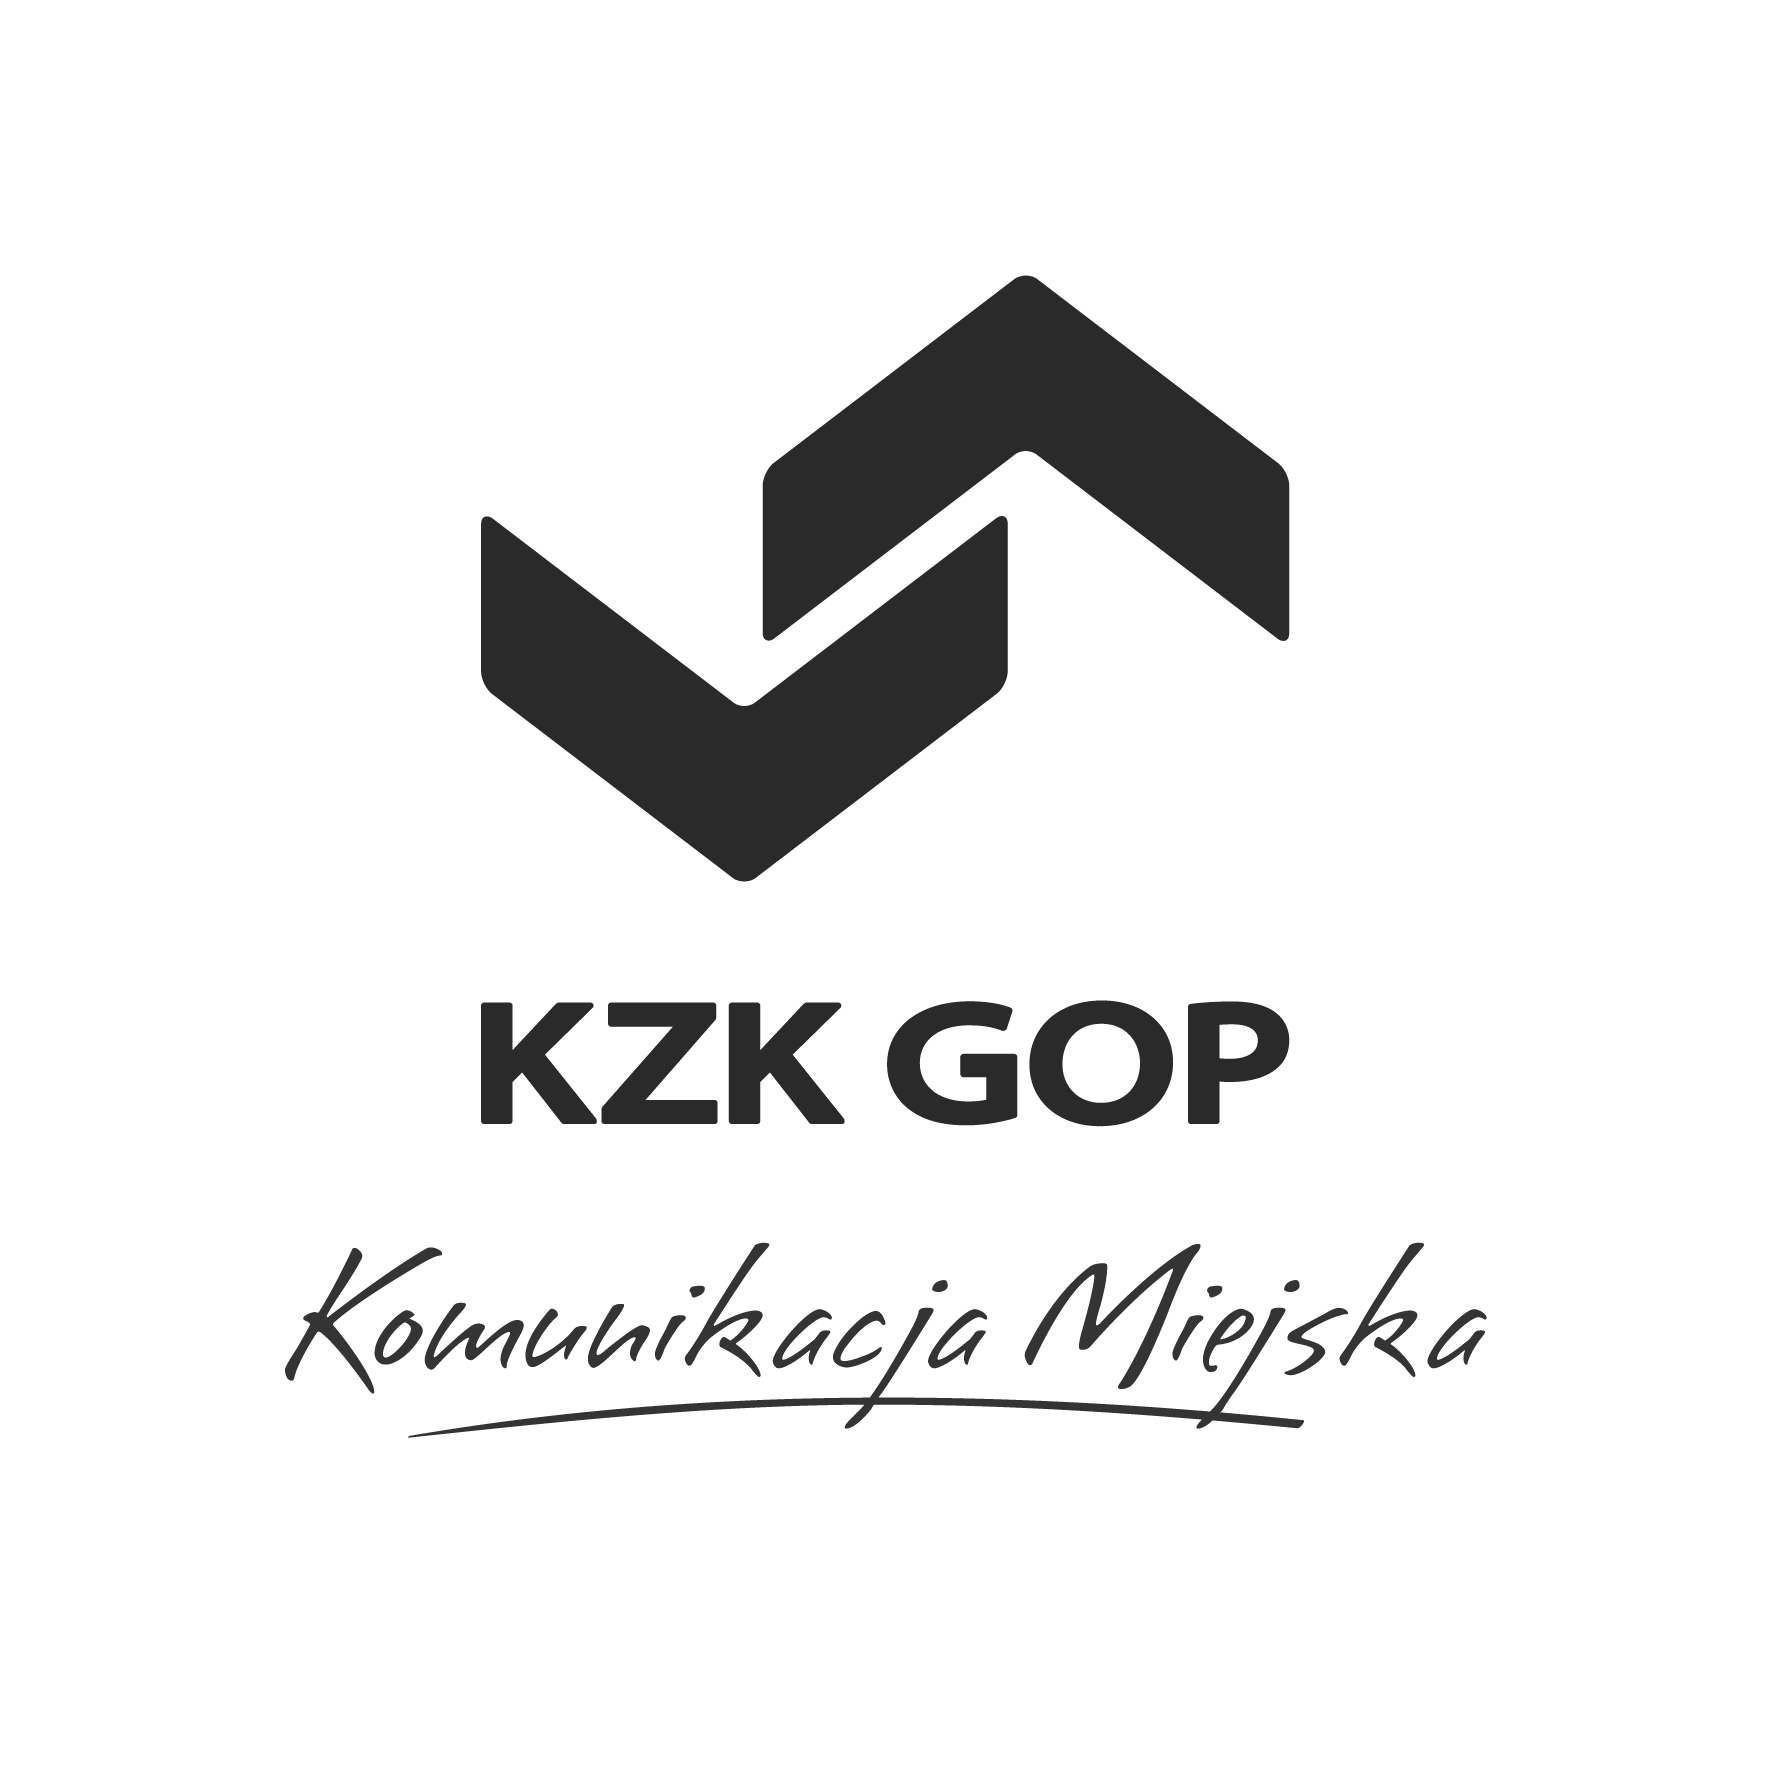 kzk gop logo